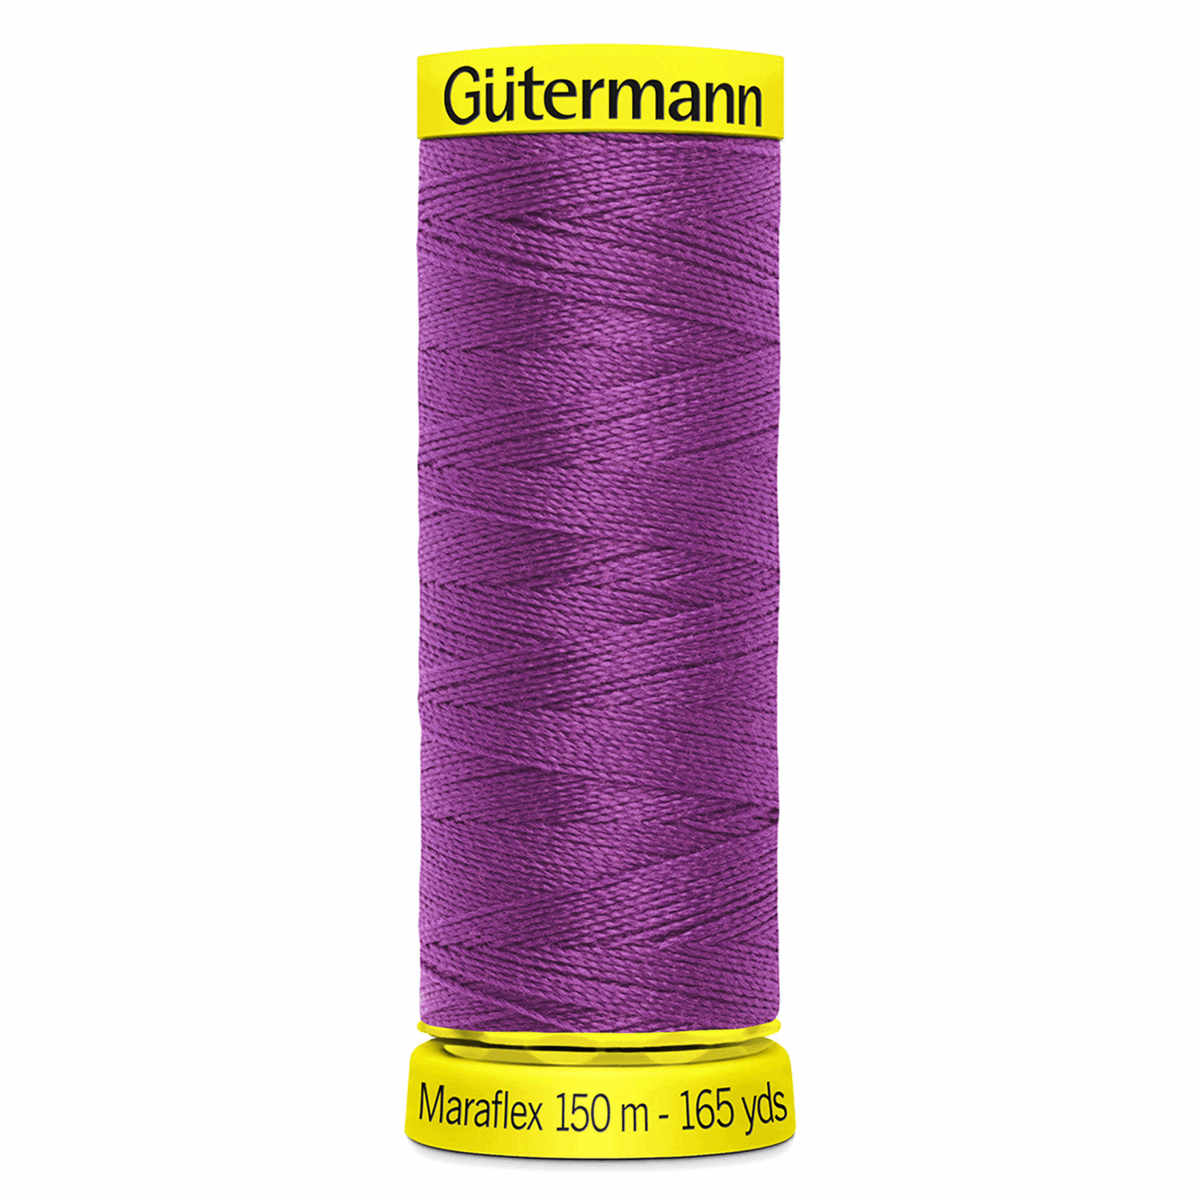 Gutermann Maraflex Elastic Sewing Thread 150m Dark Cerise 321